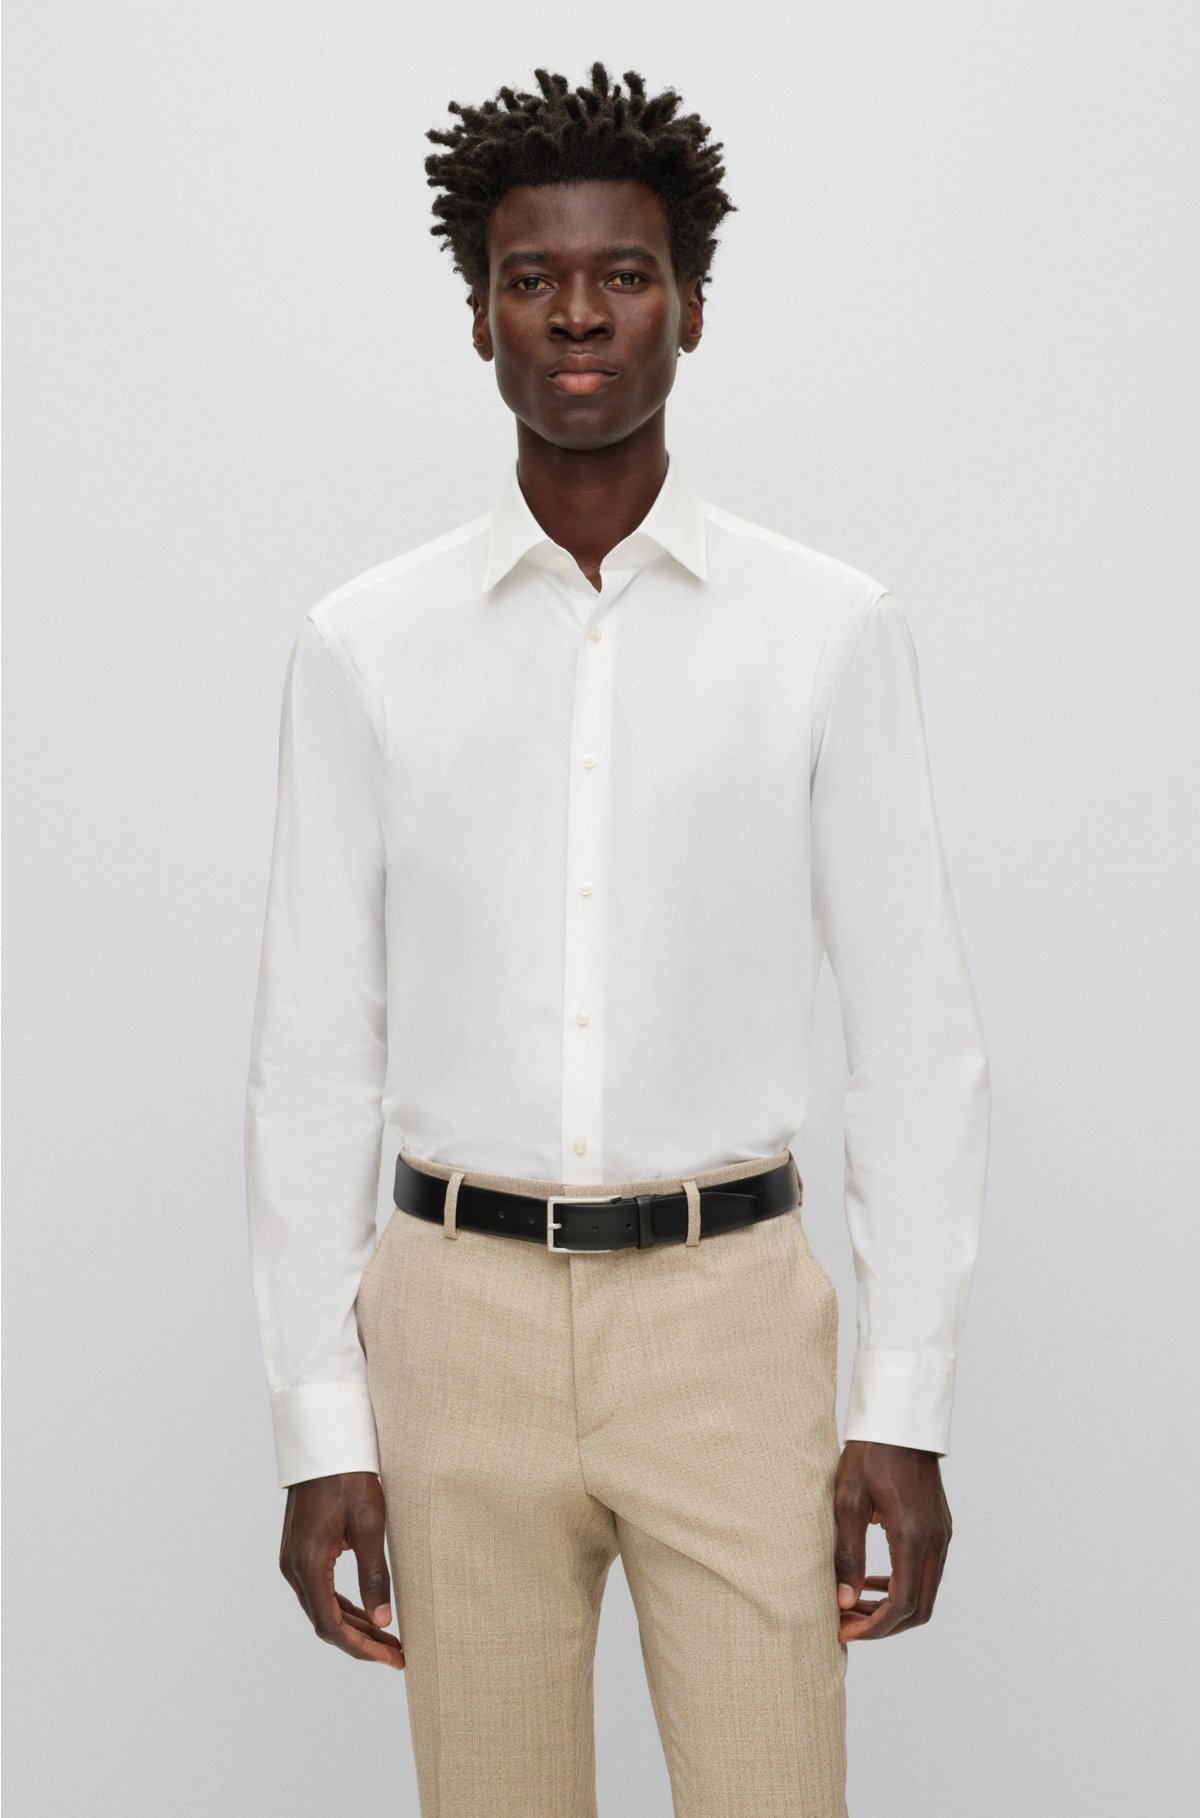 Regular-fit shirt in easy-iron cotton poplin, White